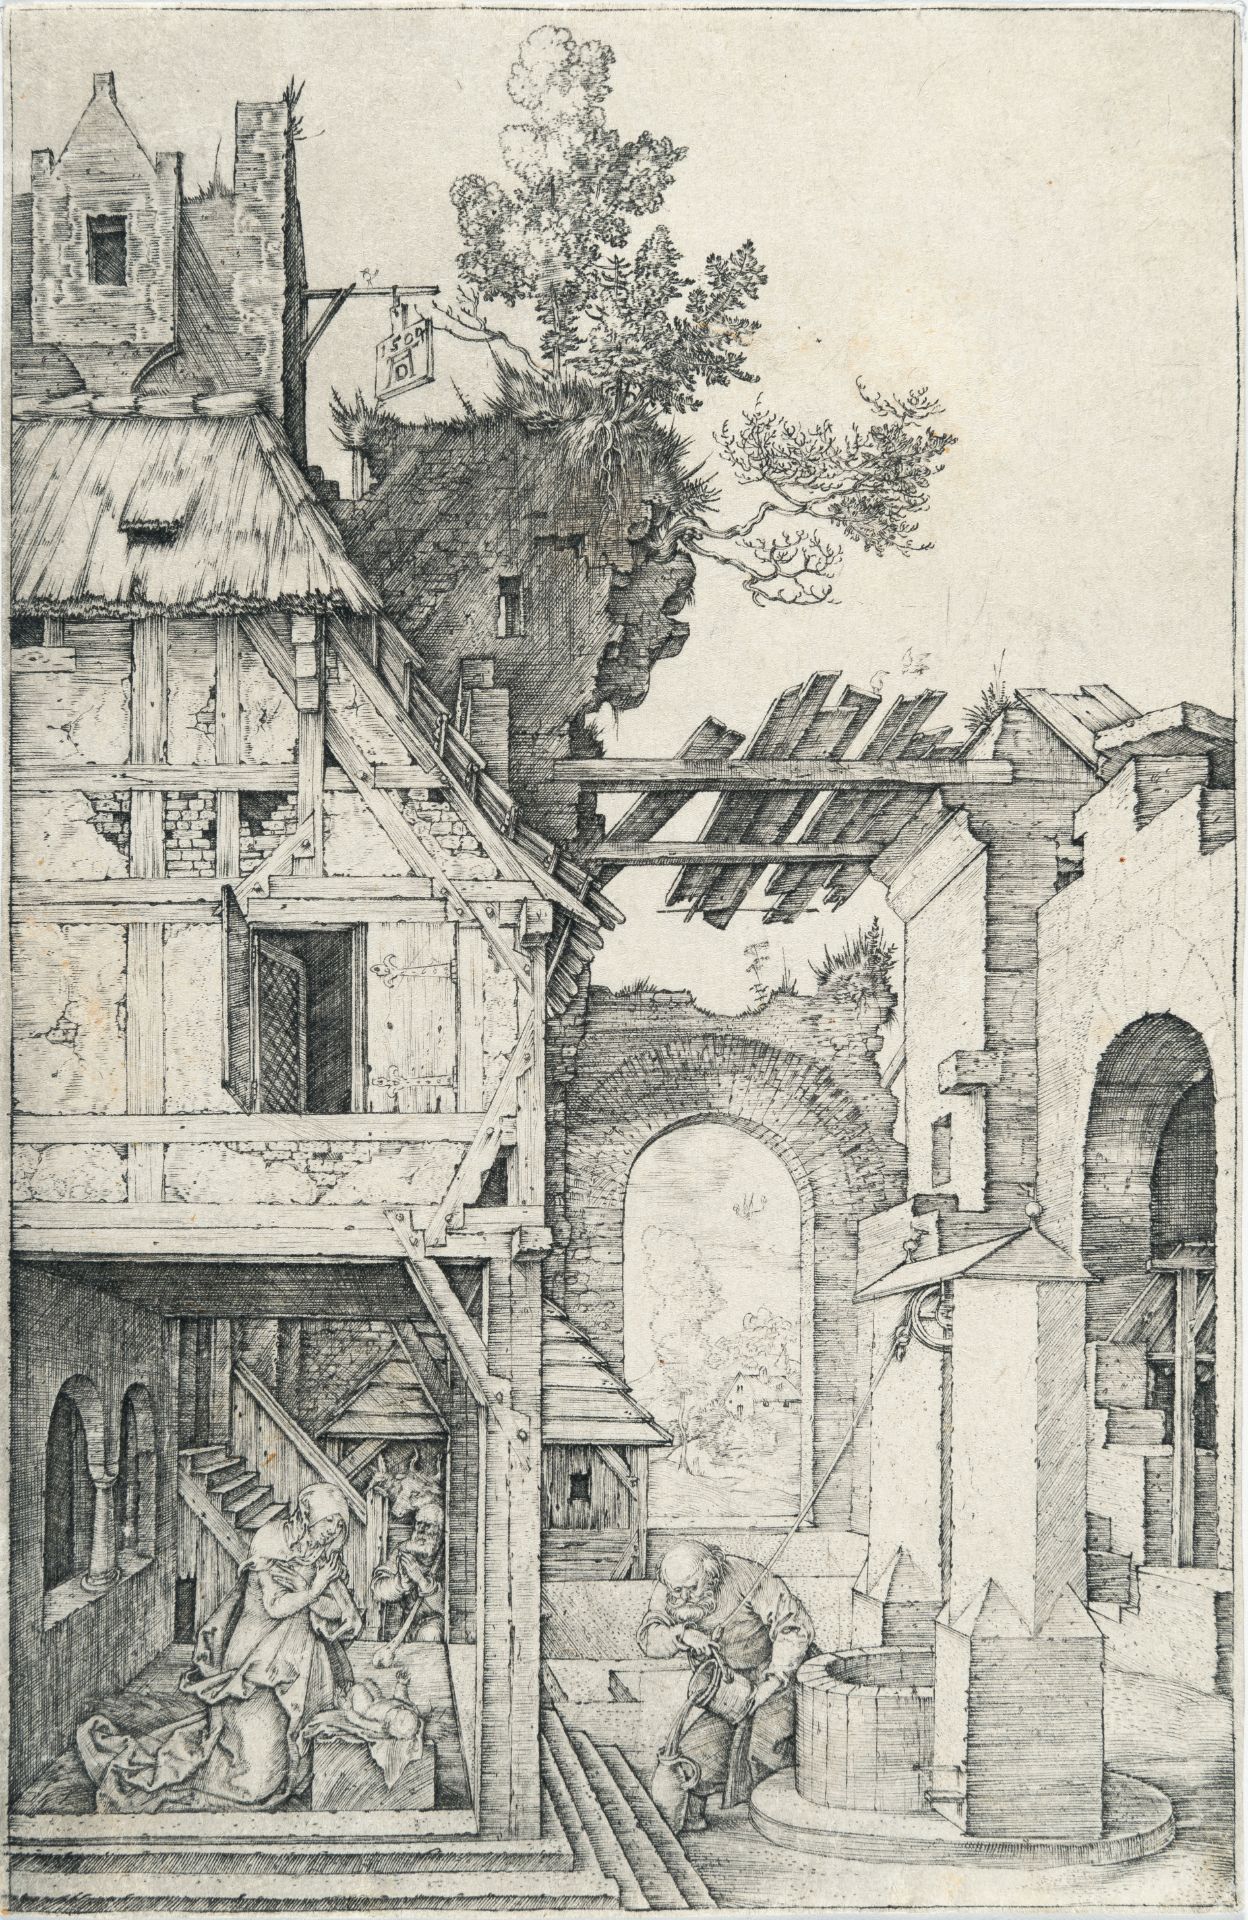 Albrecht Dürer (1471 - Nürnberg - 1528) – The Birth of Christ